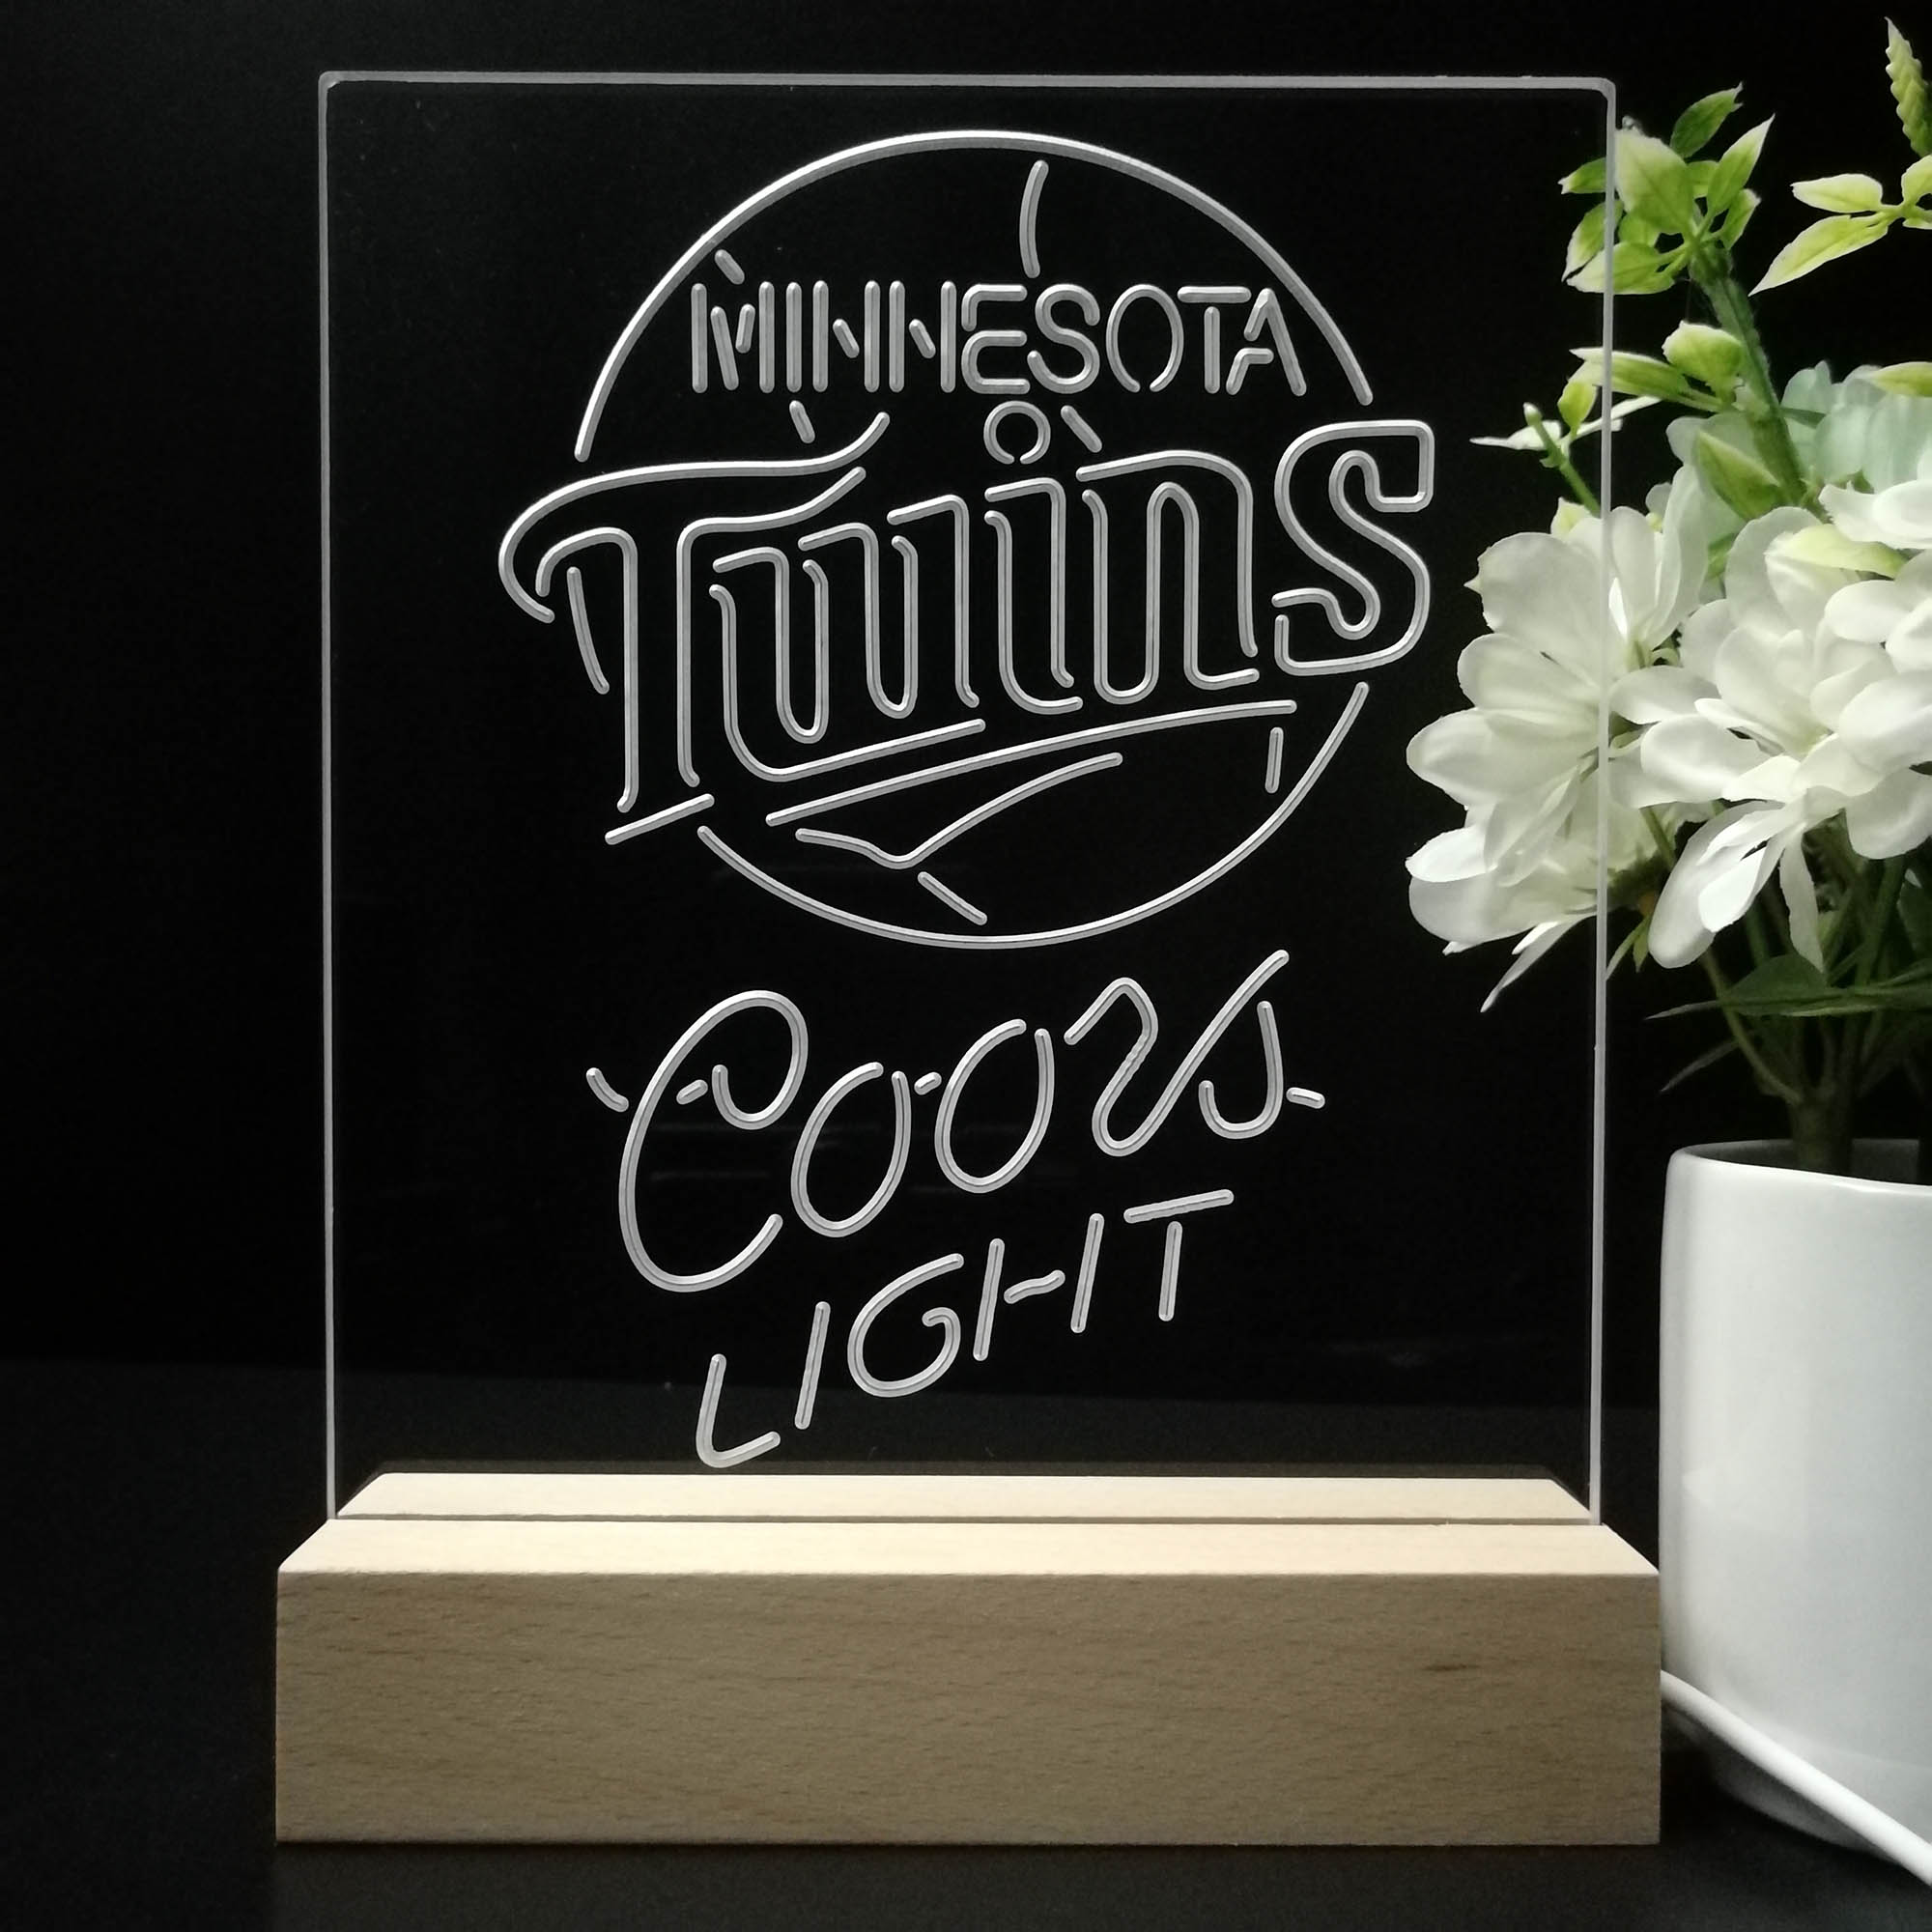 Minnesota Twins Coors Light 3D LED Optical Illusion Sport Team Night Light